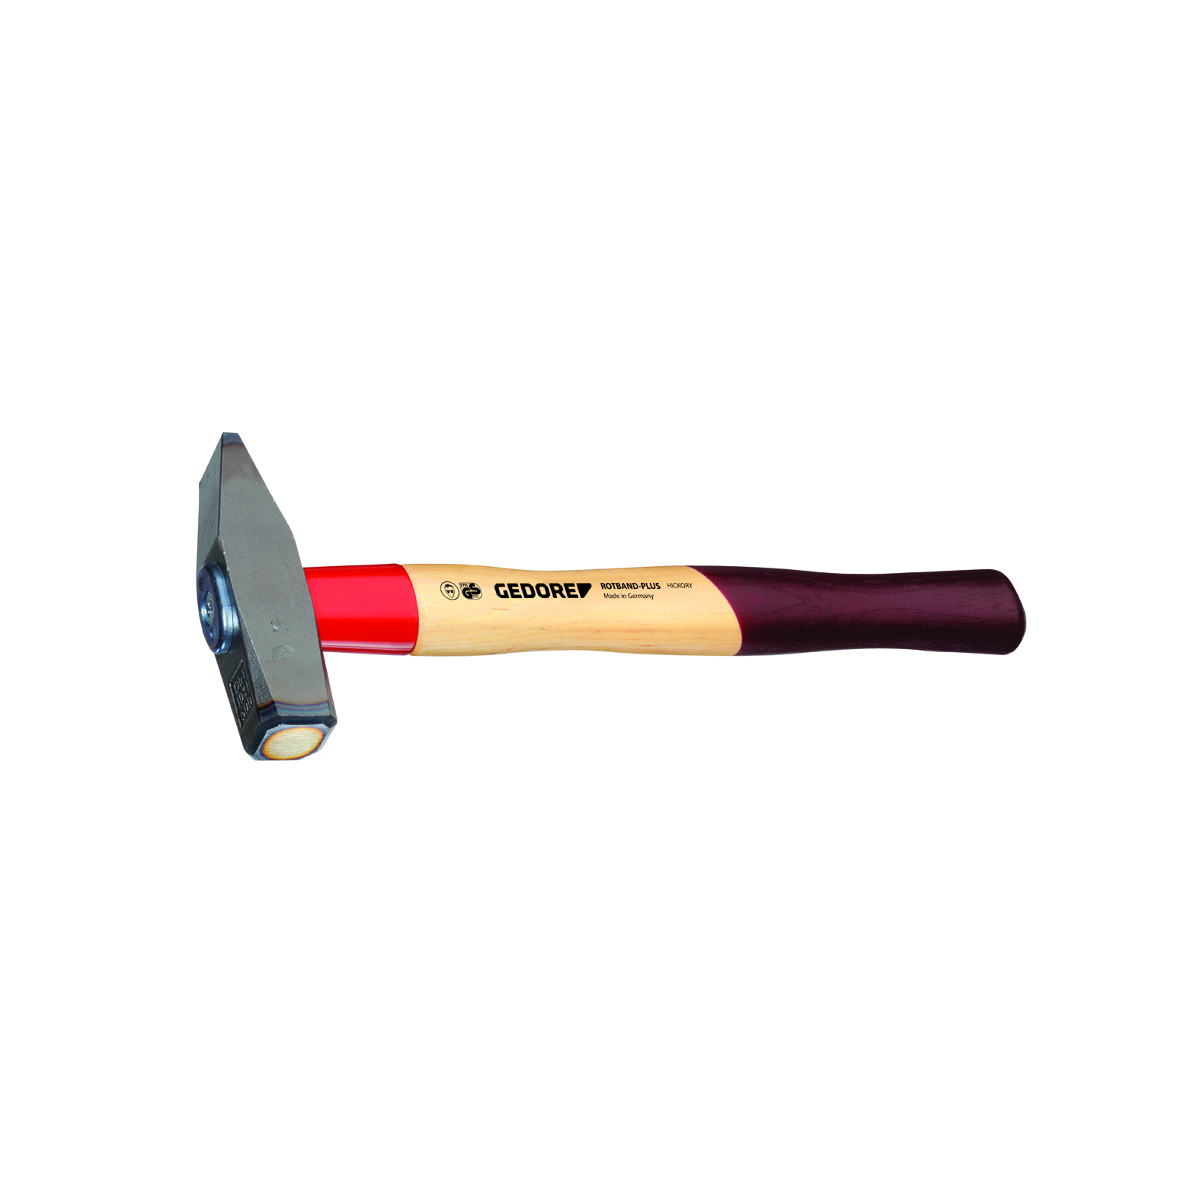 GEDORE 8584200 Engineers´ hammer Rotband-Plus 600 IH-500, 500g